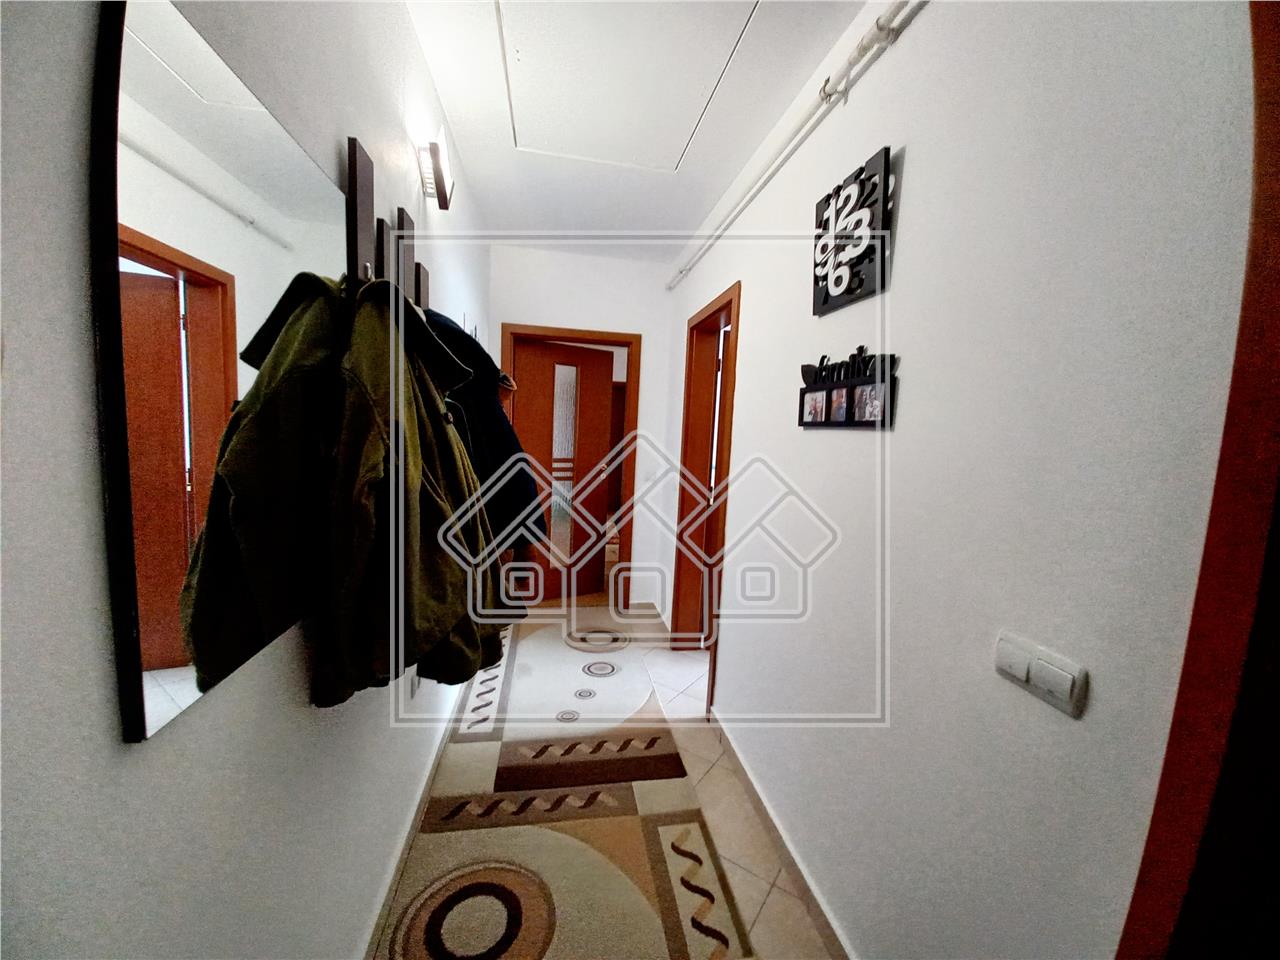 Apartment for sale in Alba Iulia in the attic - elevator - BCR area